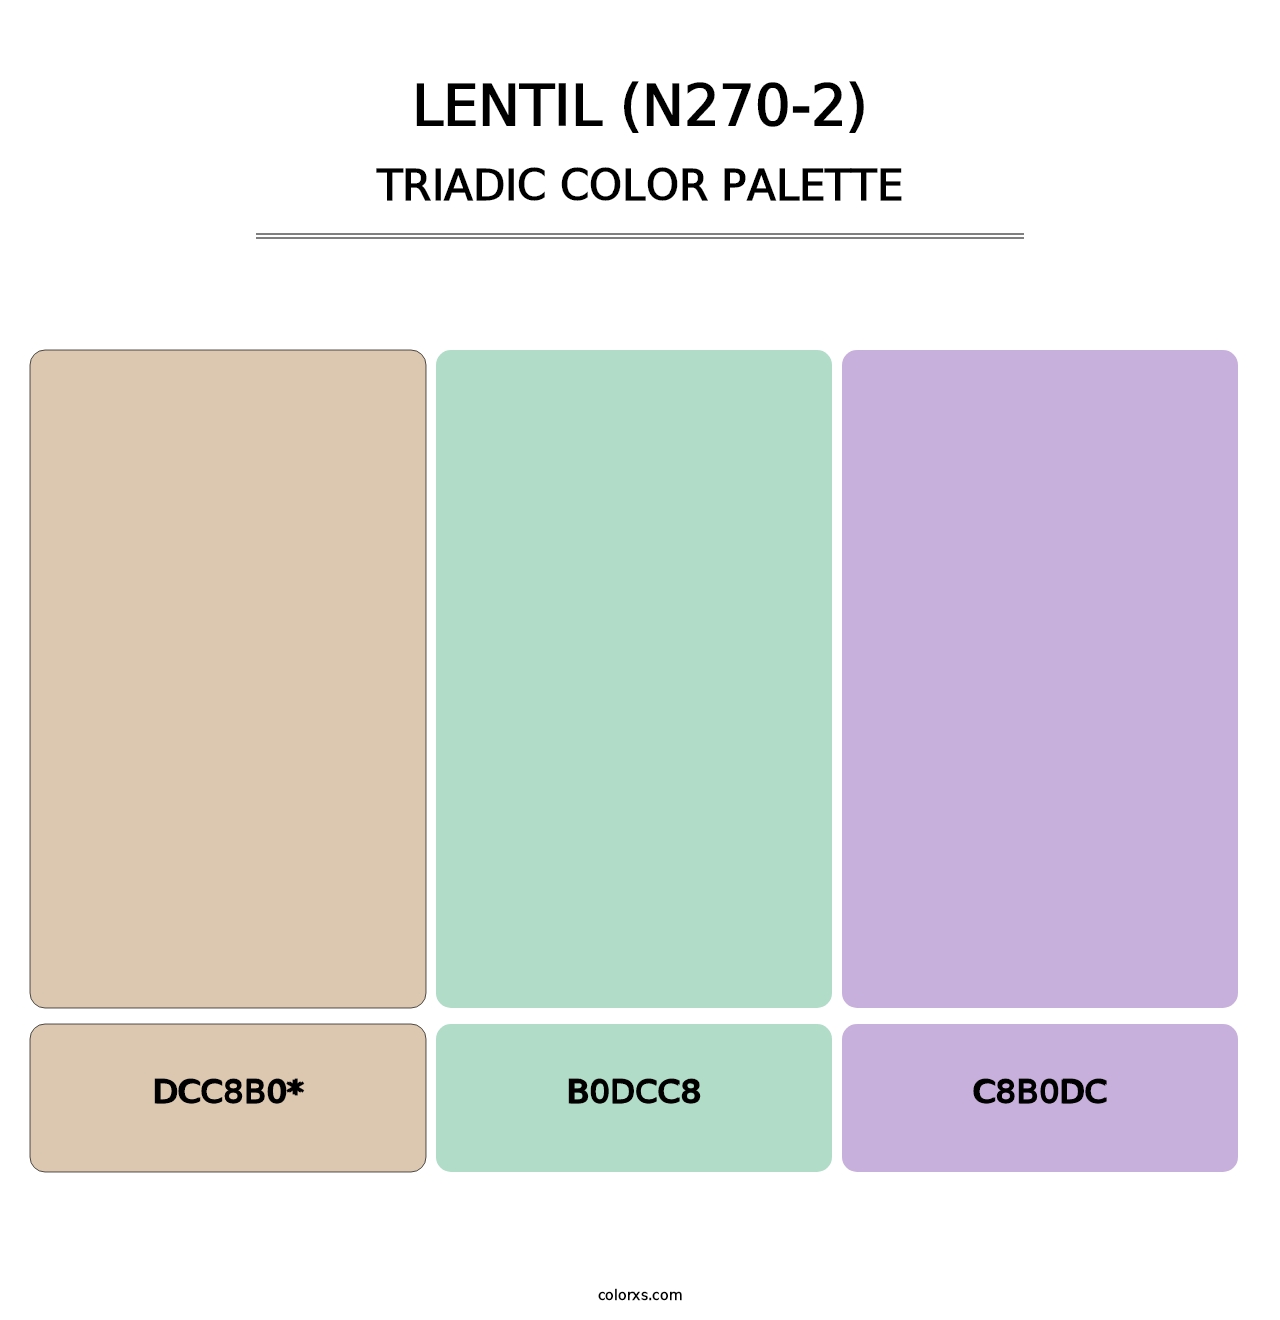 Lentil (N270-2) - Triadic Color Palette